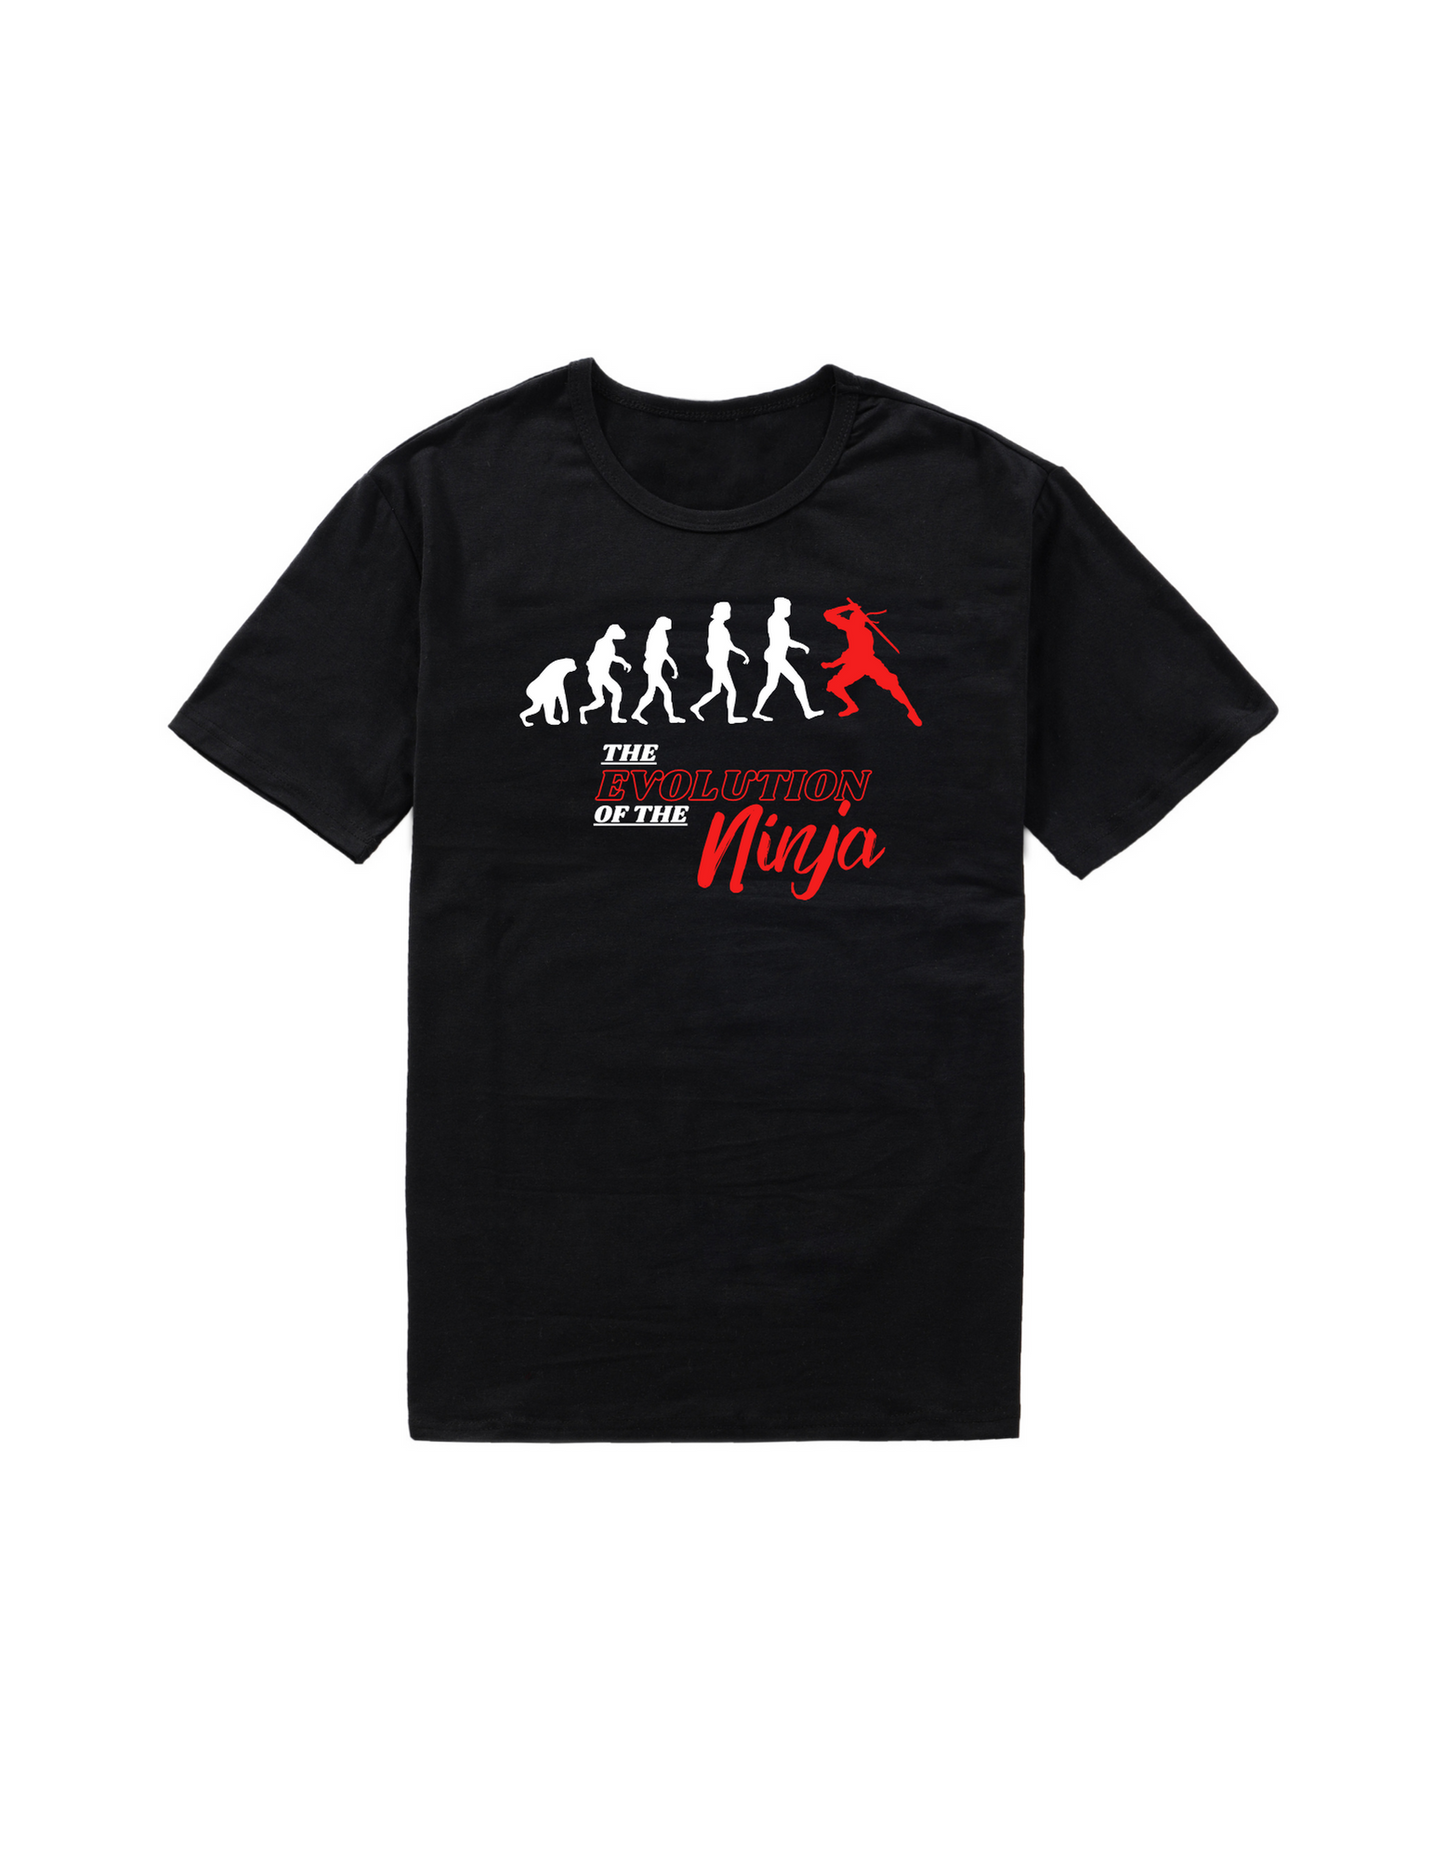 The Evolution Of The Ninja T-shirt